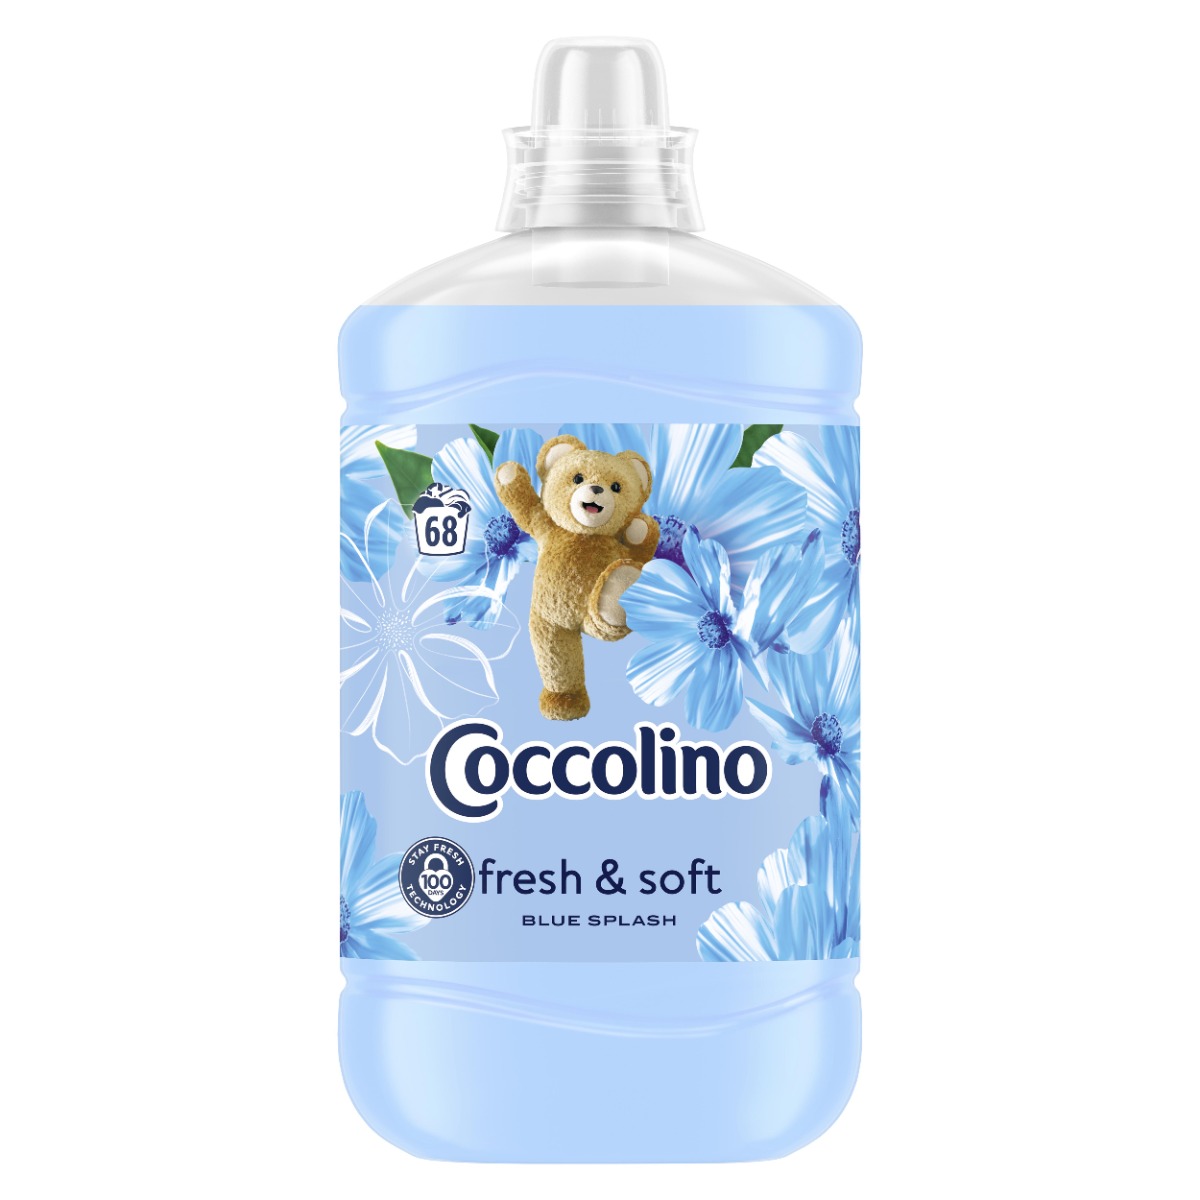 Coccolino Aviváž Blue Splash fresh & soft 1700 ml 68 dávek Coccolino